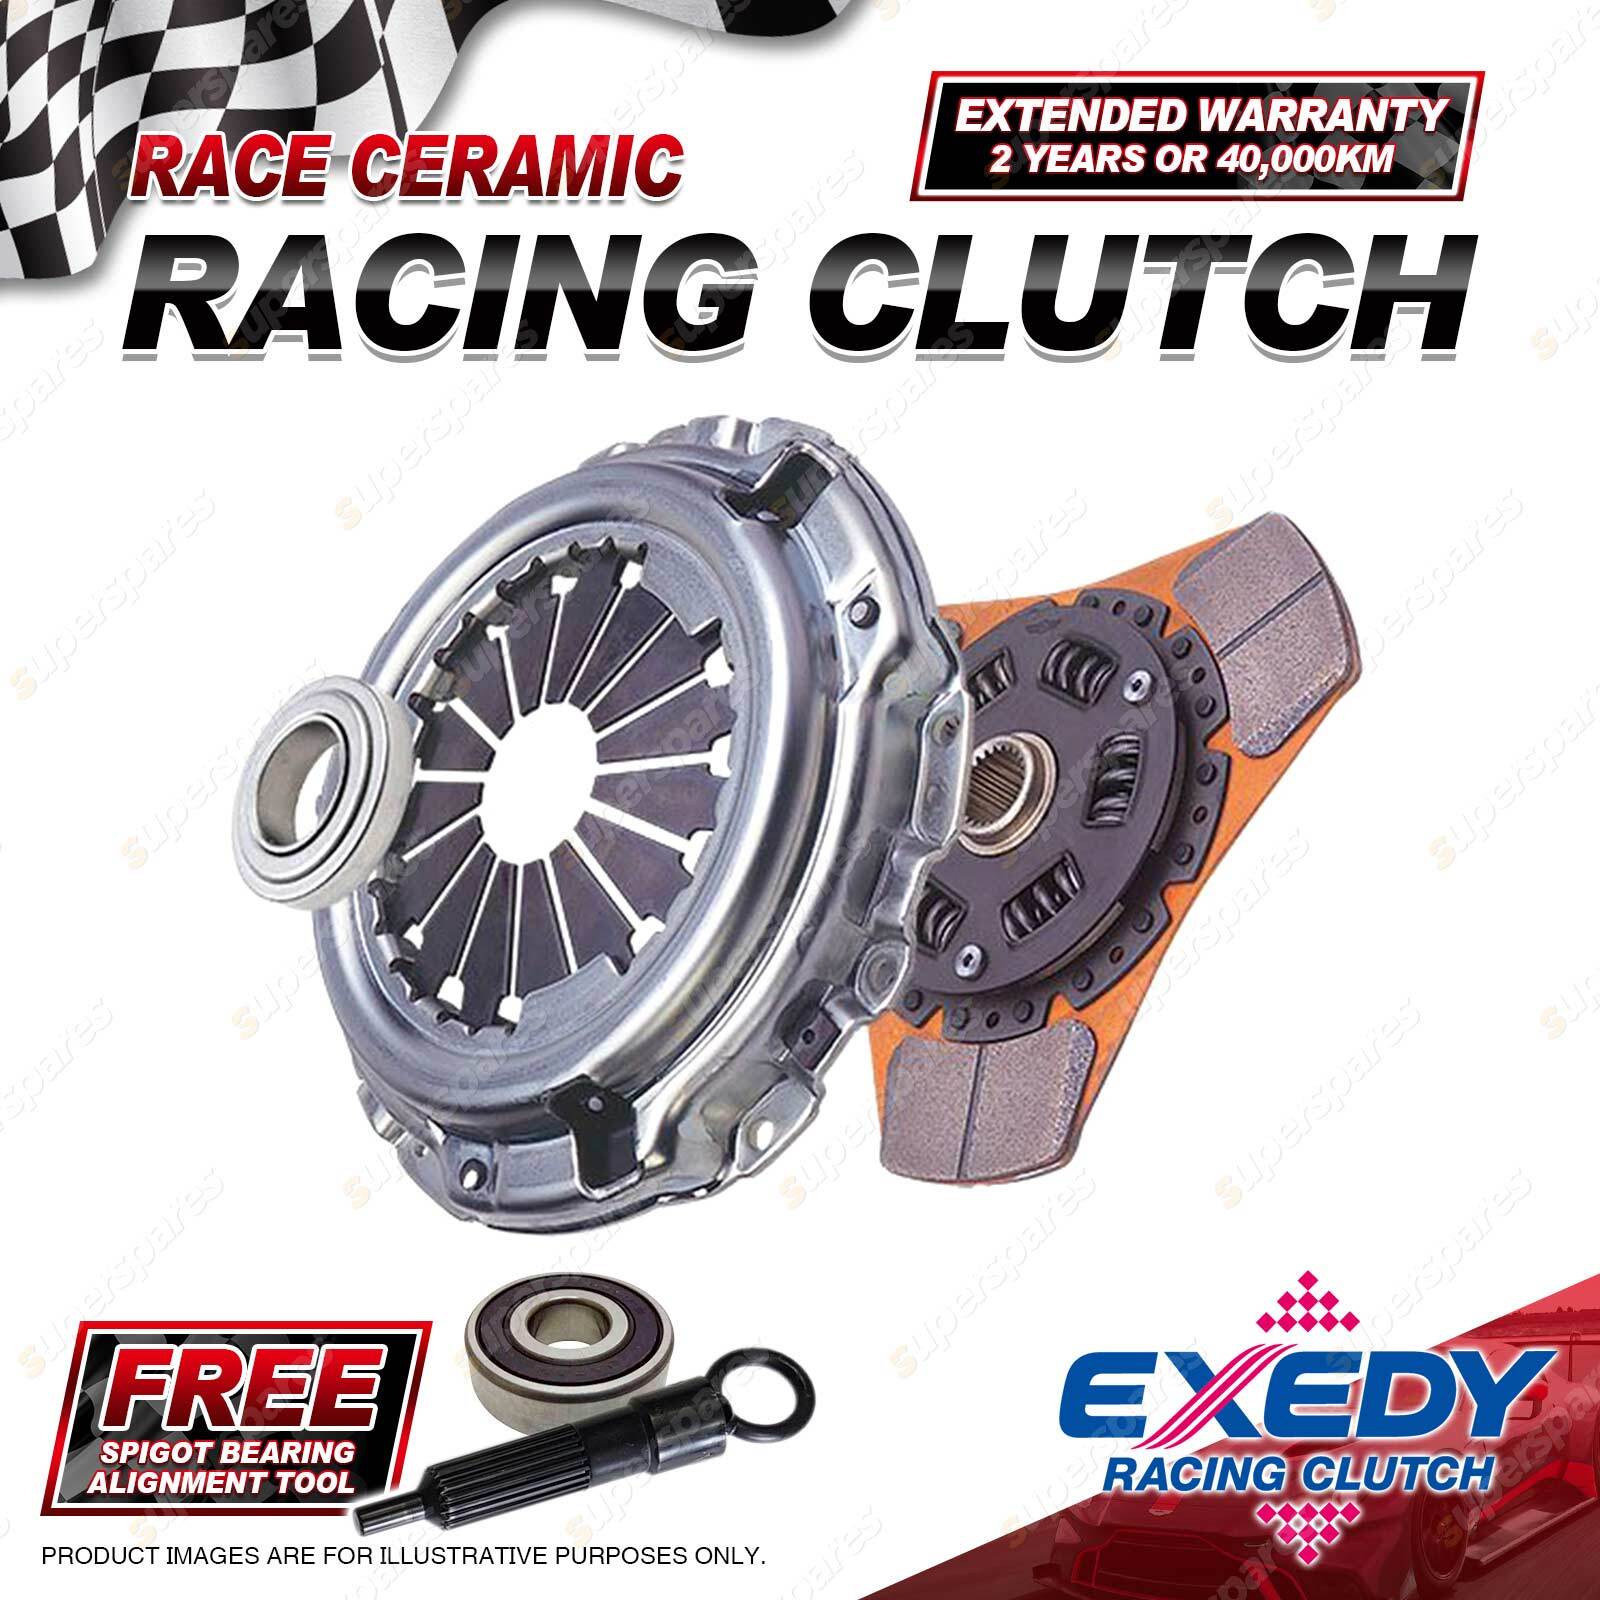 Exedy Race Ceramic Clutch Kit for Nissan Cefiro Fairlady Z31